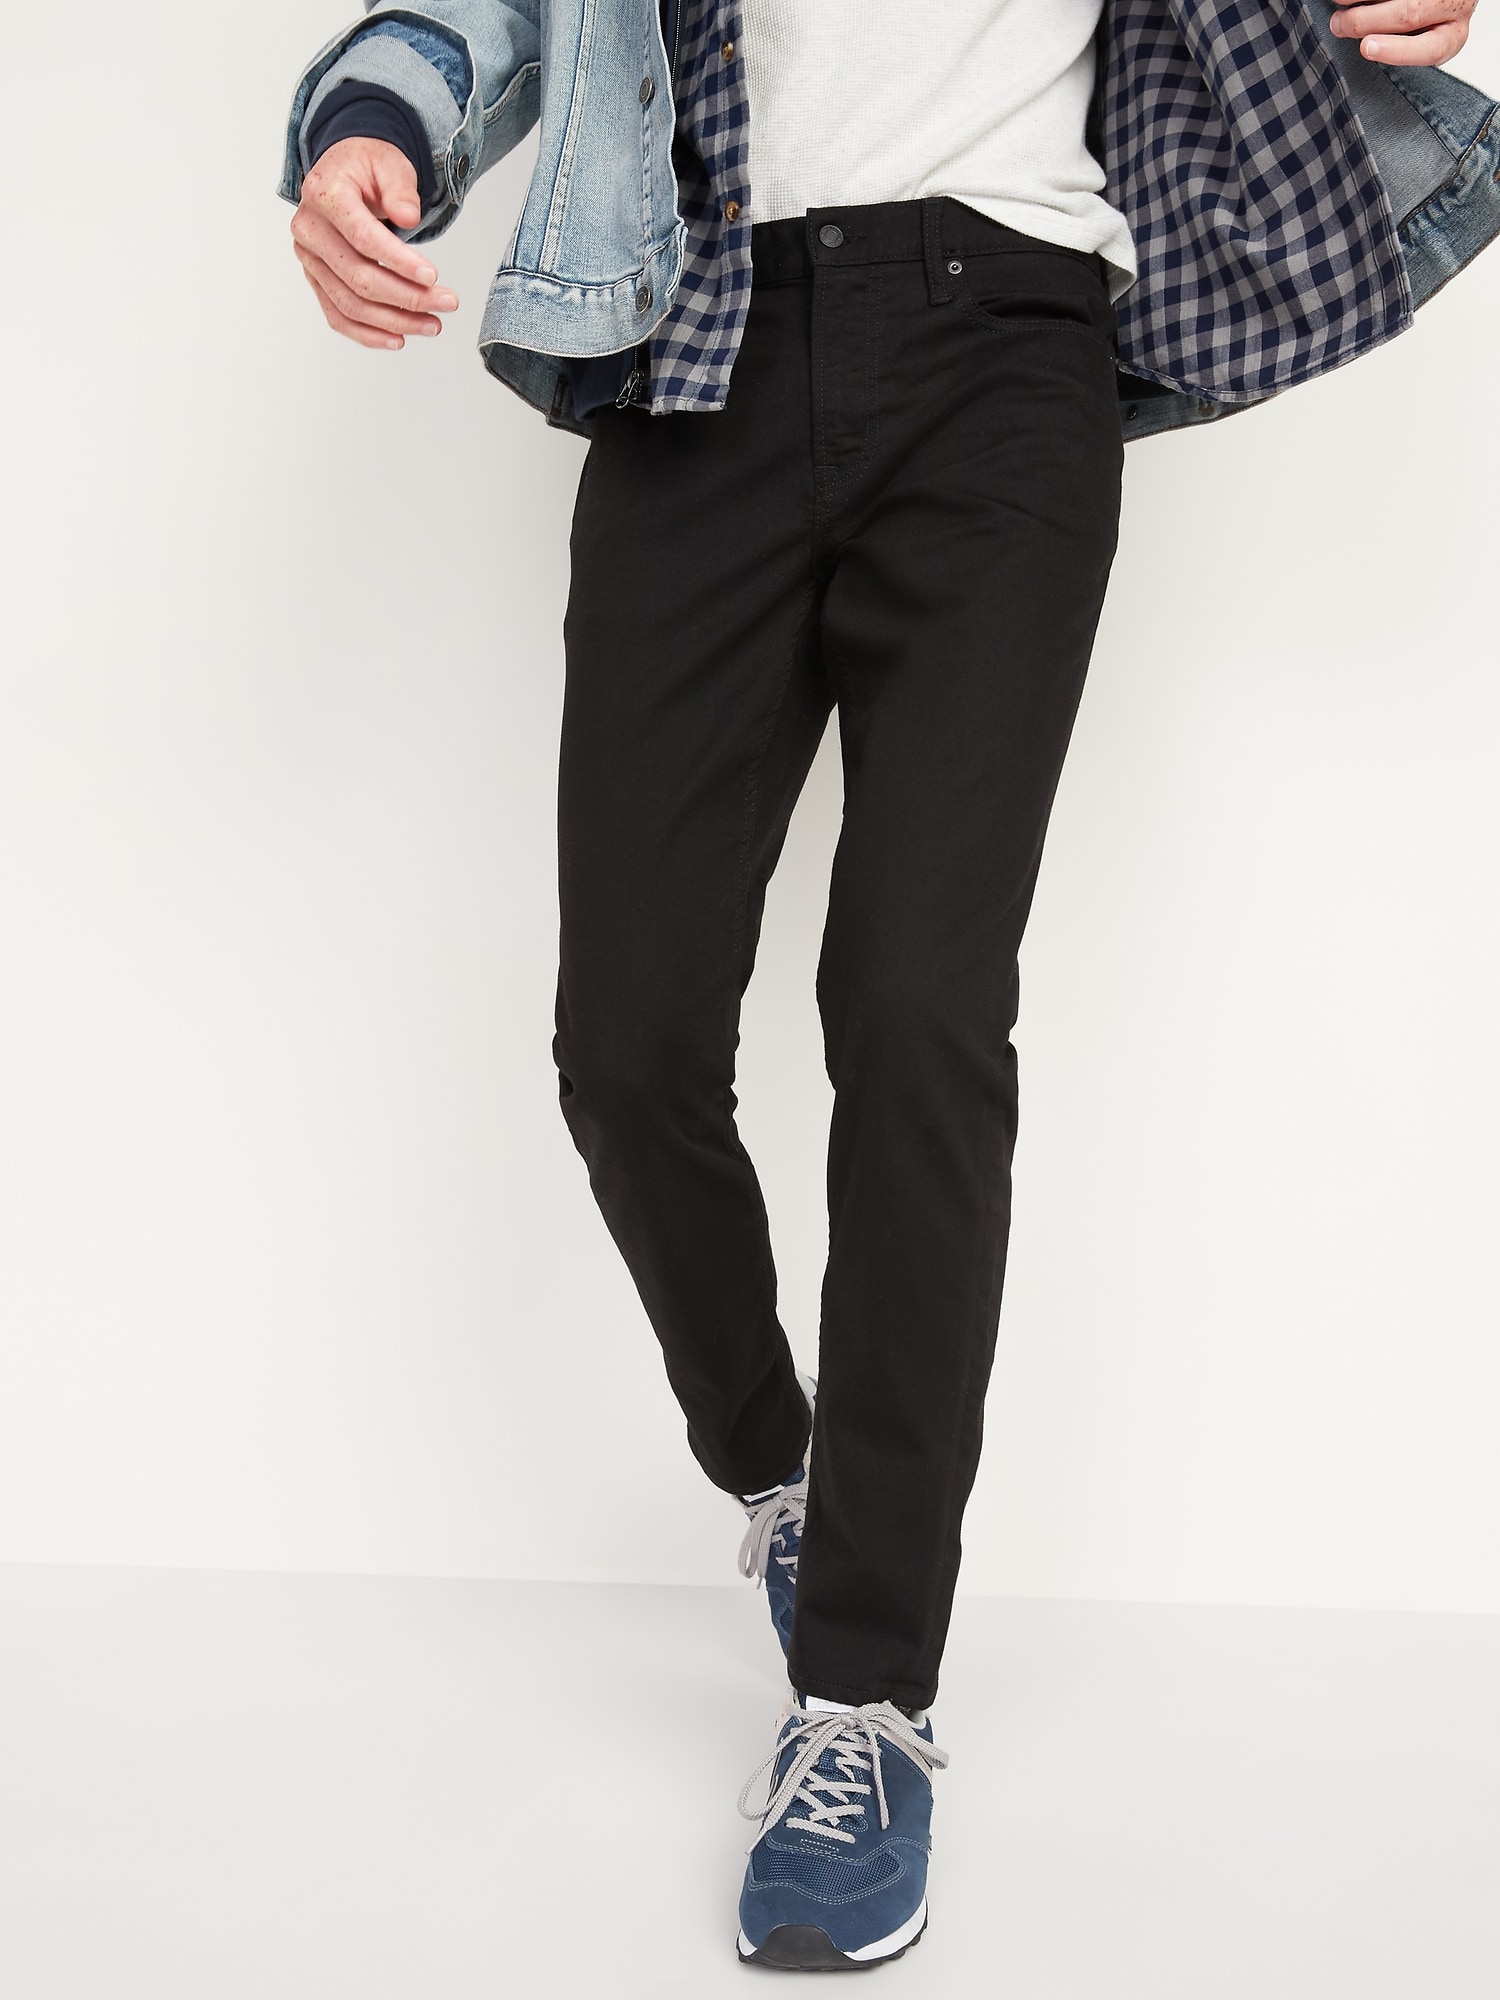 Slim Built-In Flex Max Never-Fade Jeans For Men